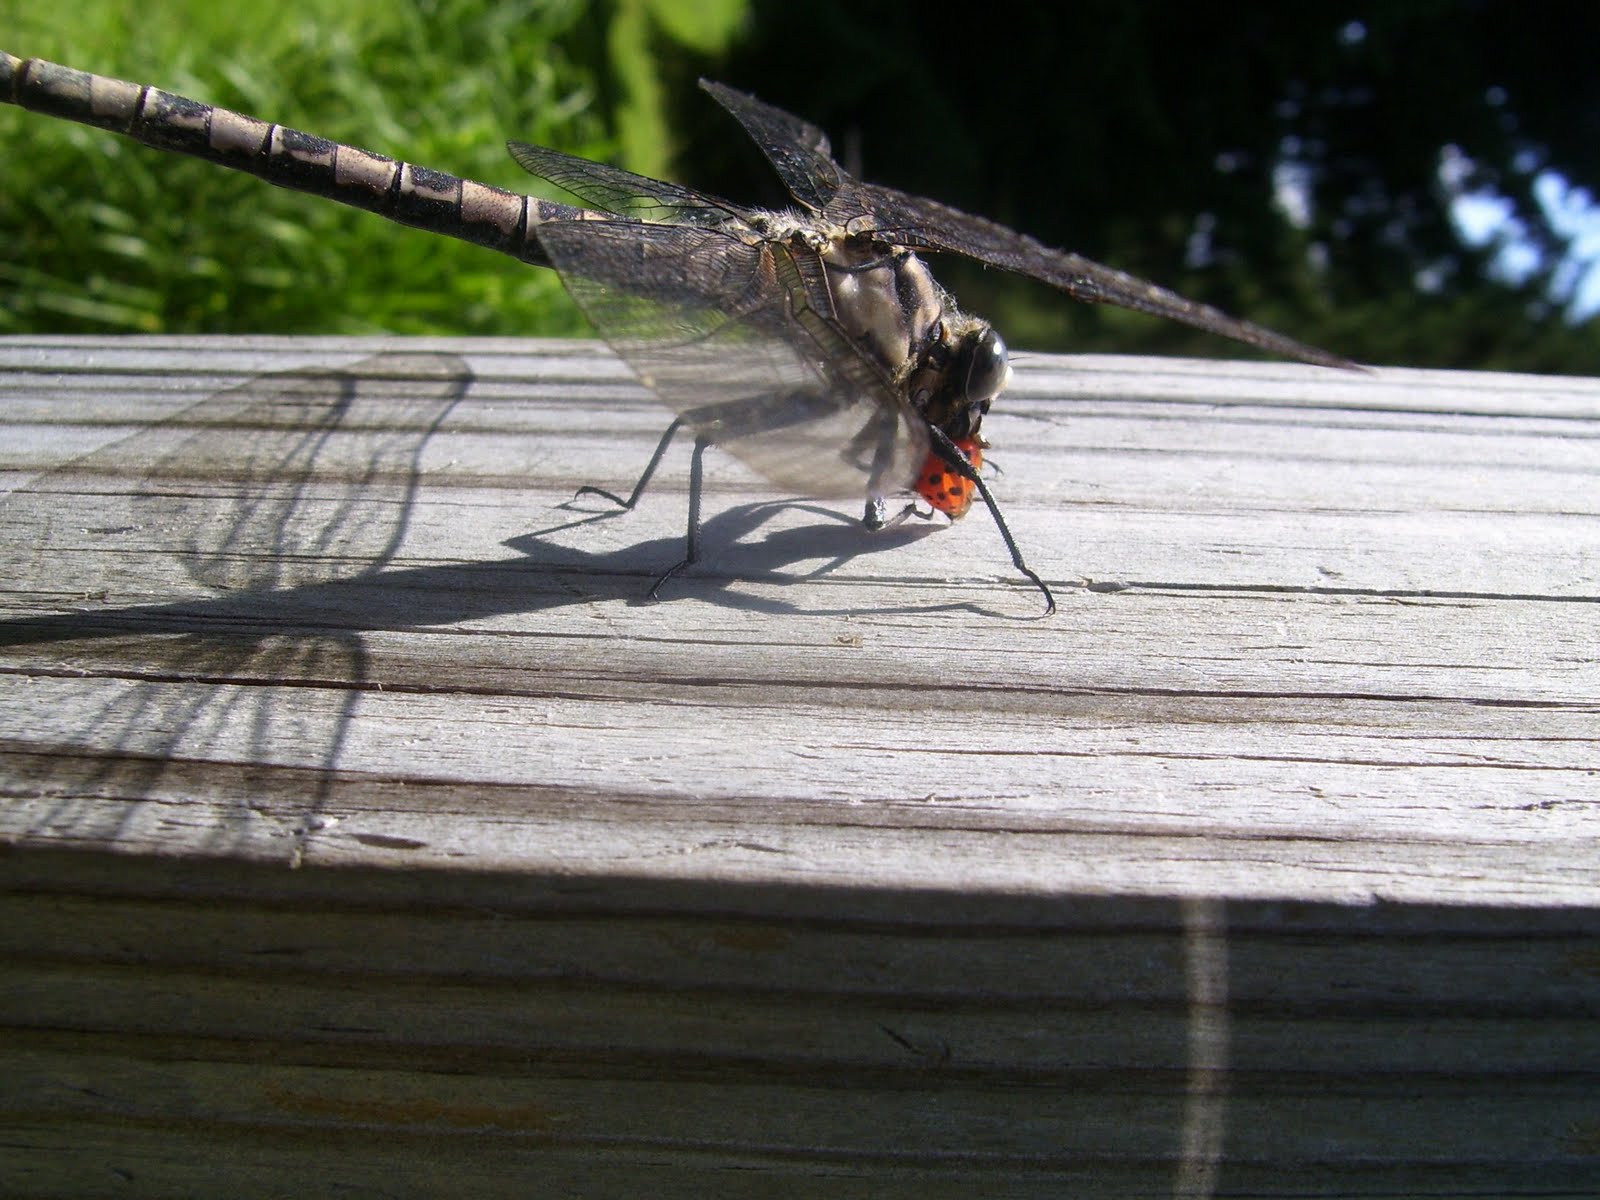 The dragonfly vs the ladybug photo